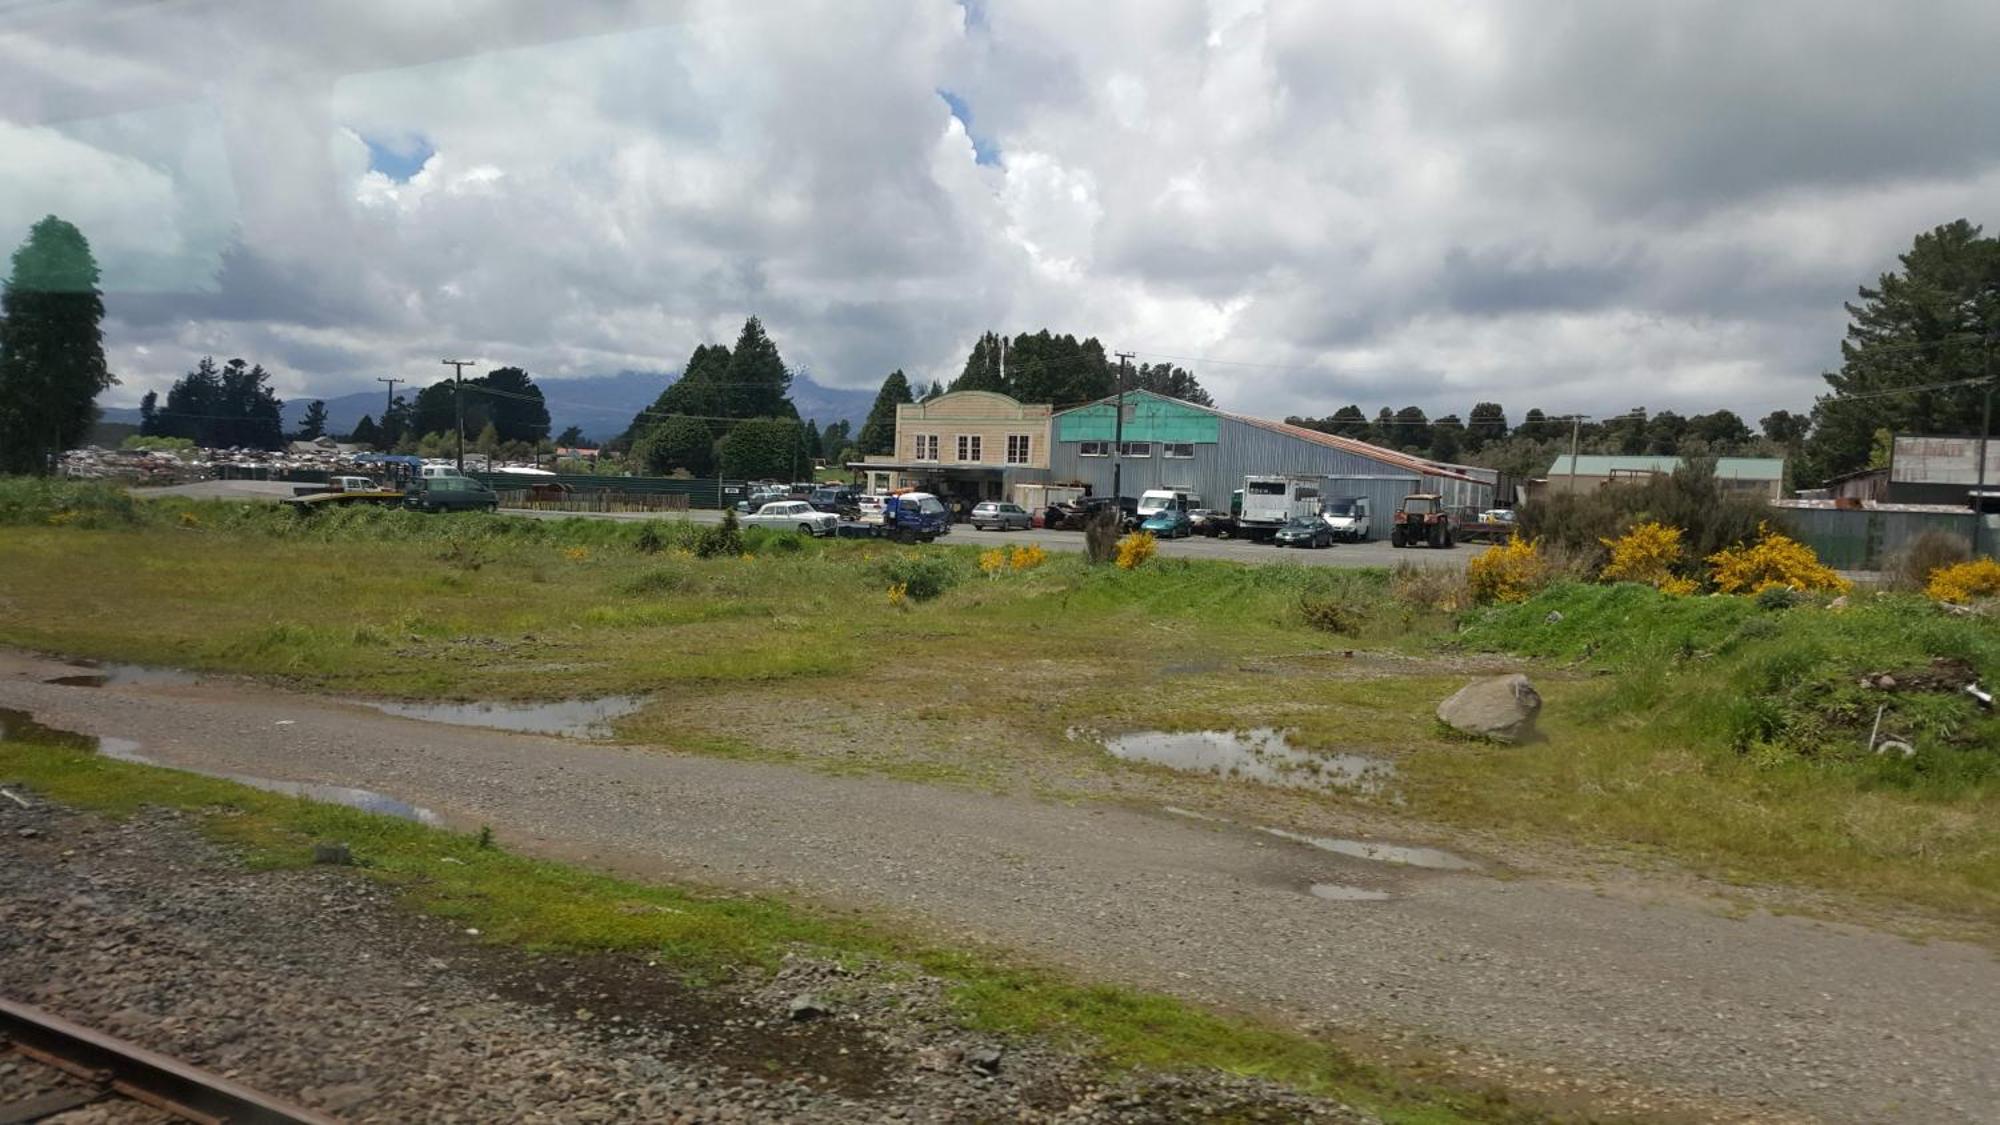 Ruapehu Mountain Motel & Lodge Охакуне Экстерьер фото